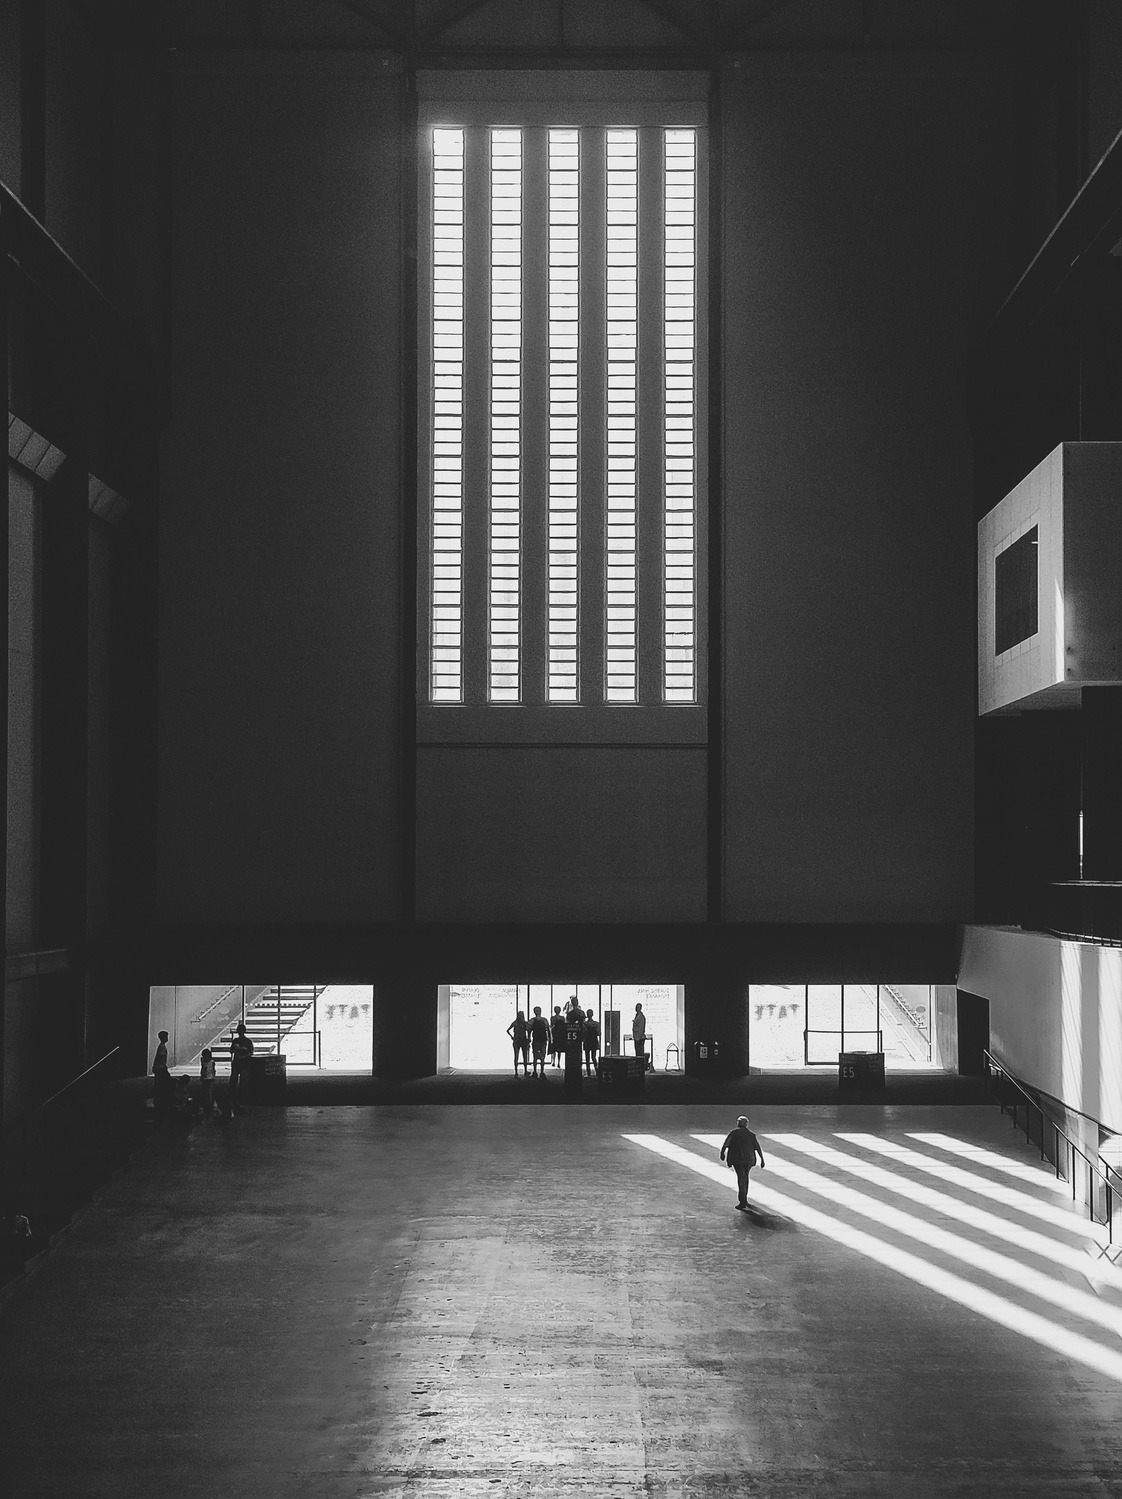 Huge windows creating huge shadows in the main Tate atrium